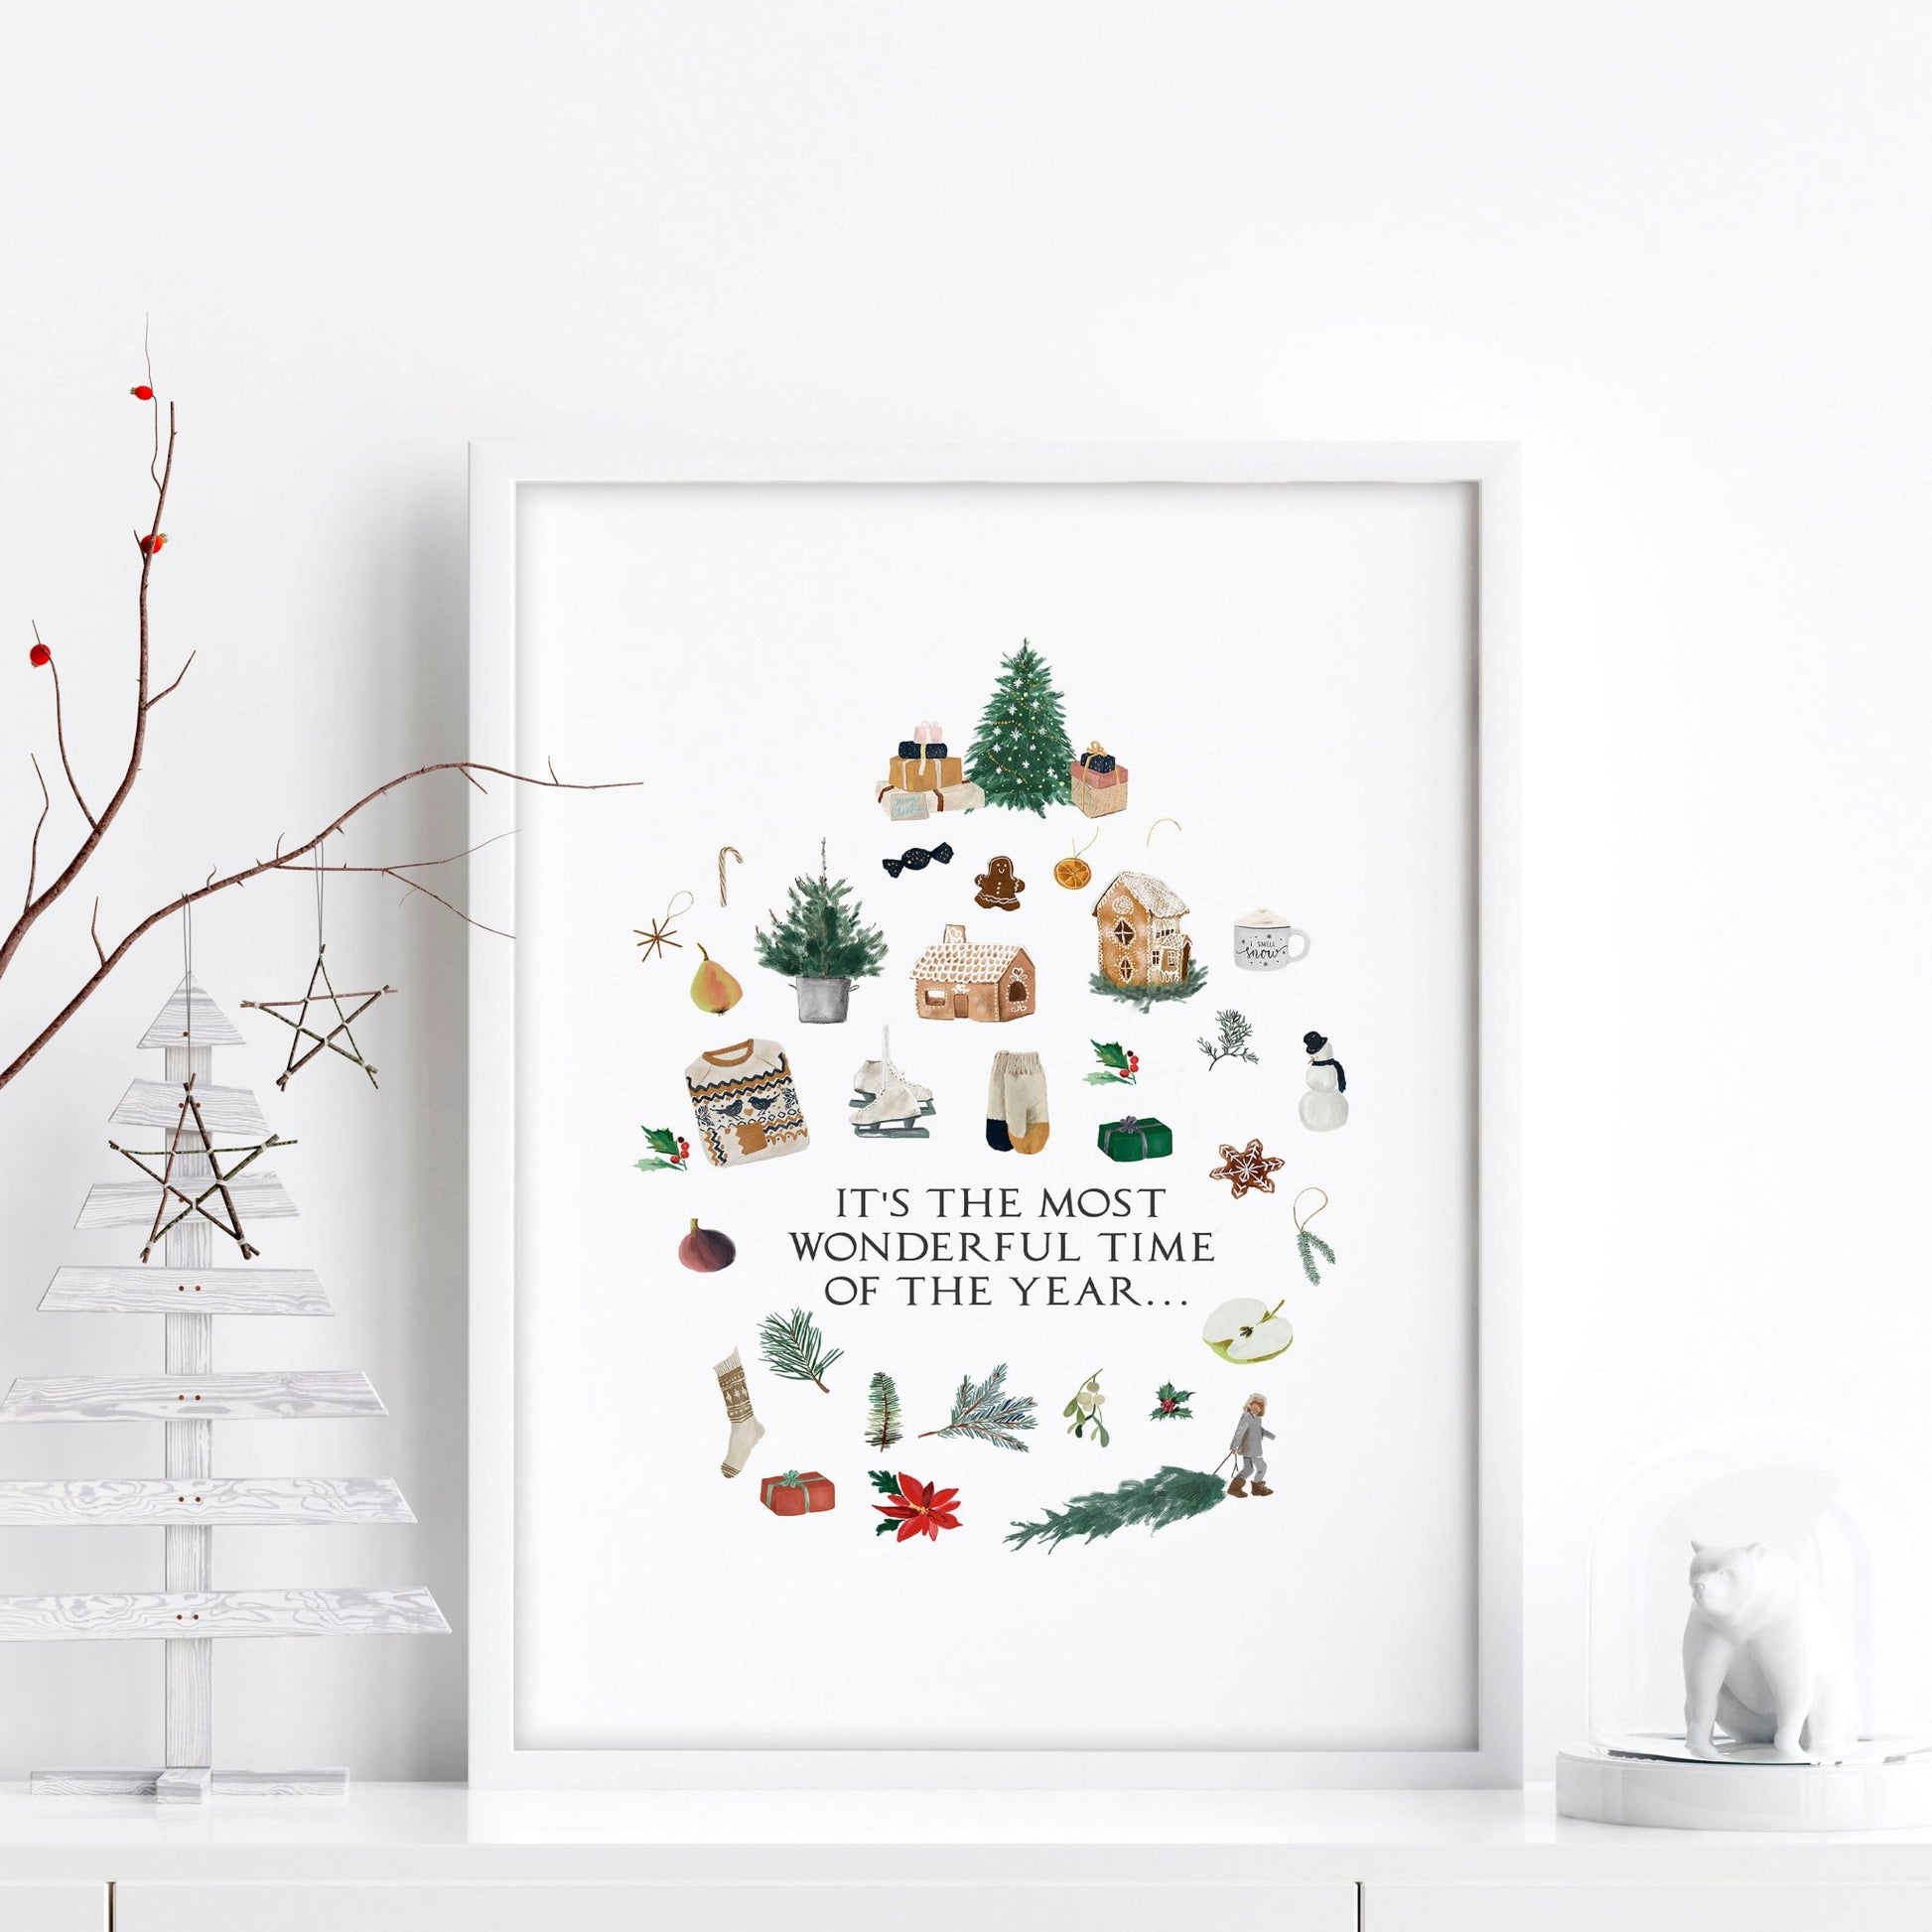 Merry Christmas wall decor | Wall art print - About Wall Art